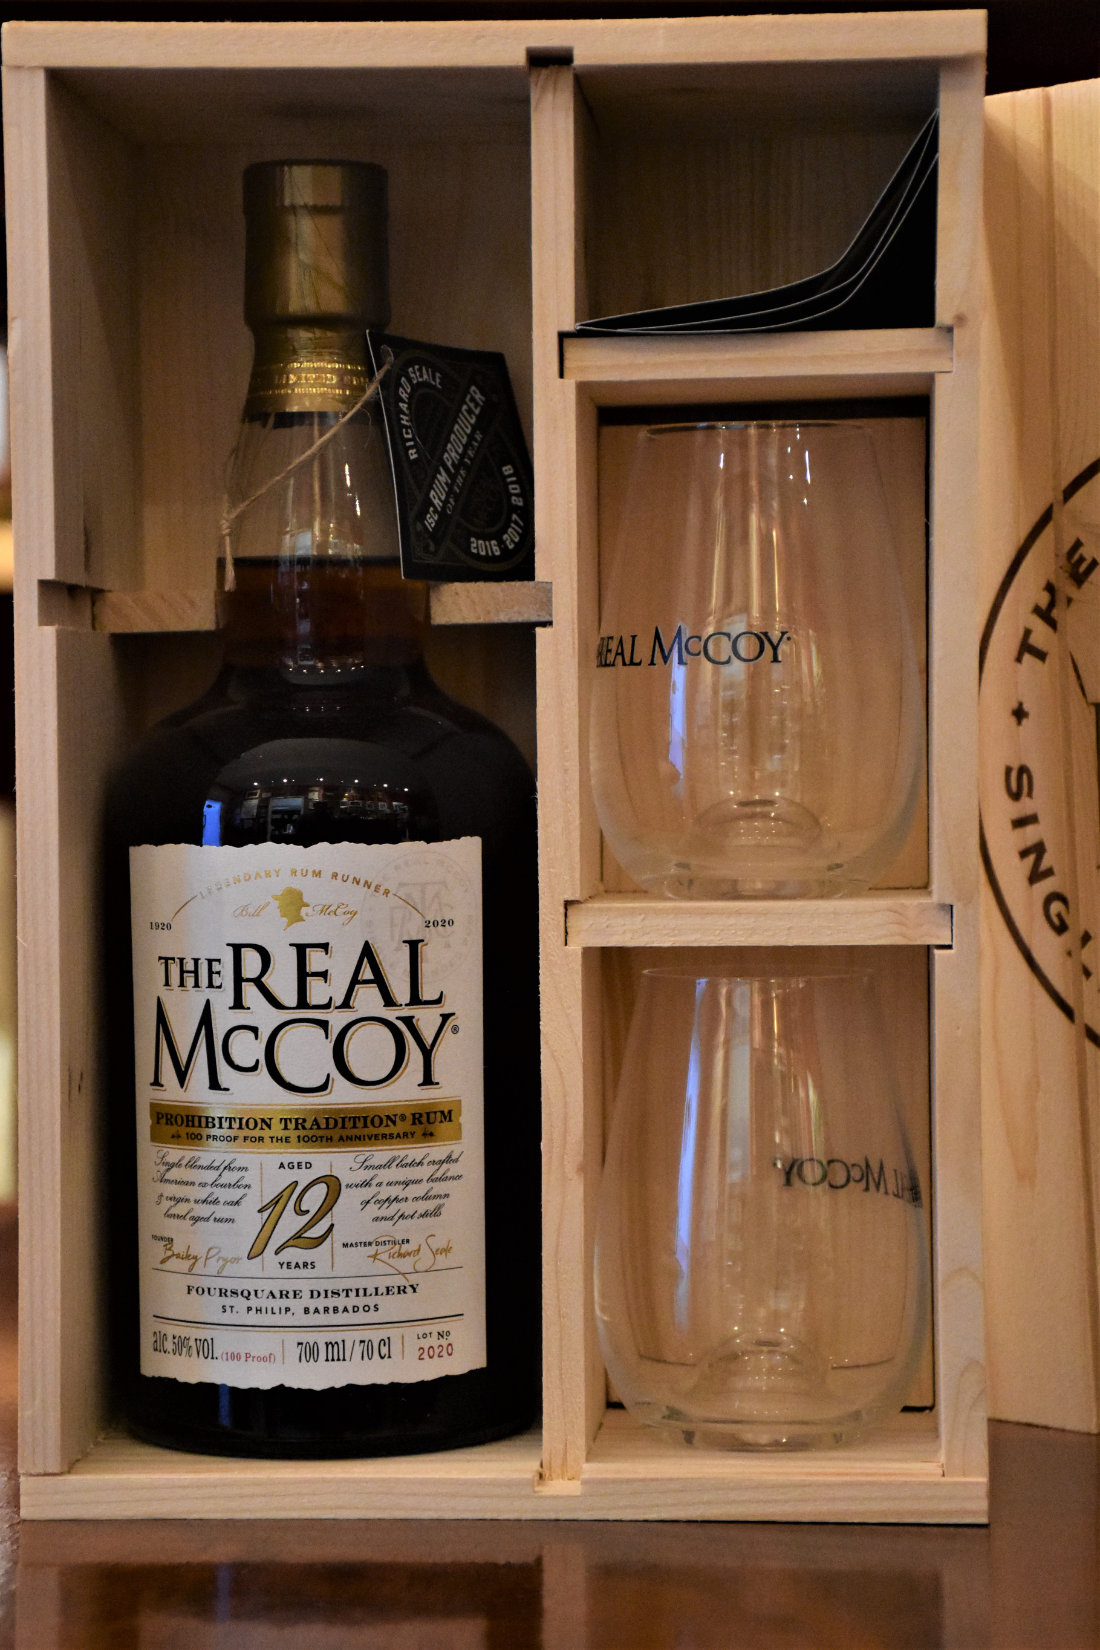 The Real McCoy 12 y.o., Prohibition Tradition, 50 %, Foursquare Distillery Barbados